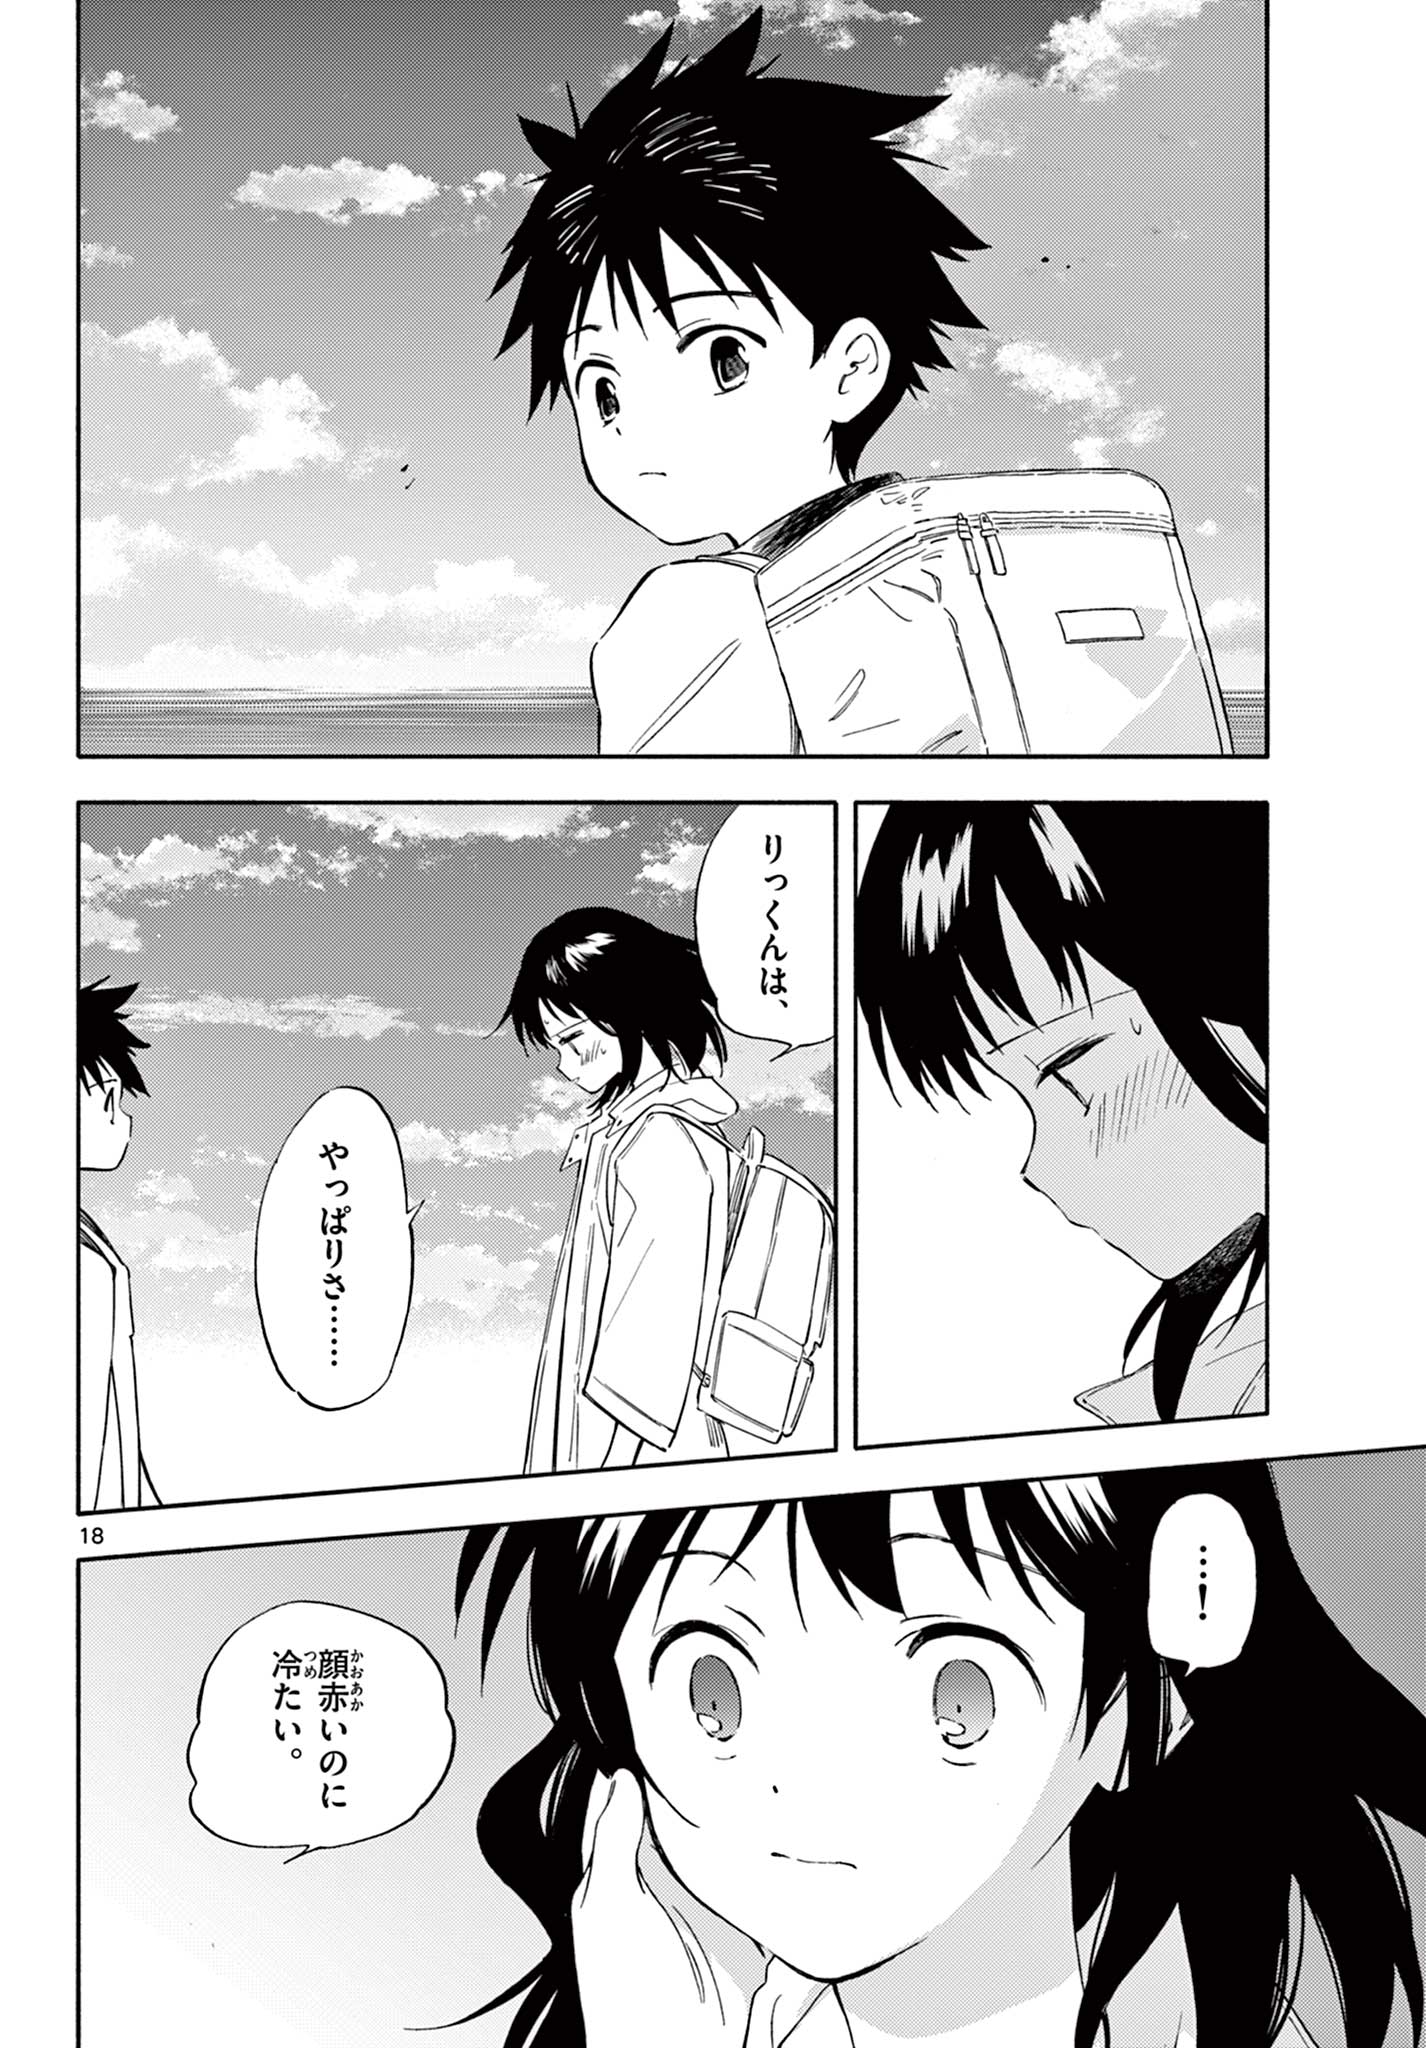 Nami no Shijima no Horizont - Chapter 14.2 - Page 6